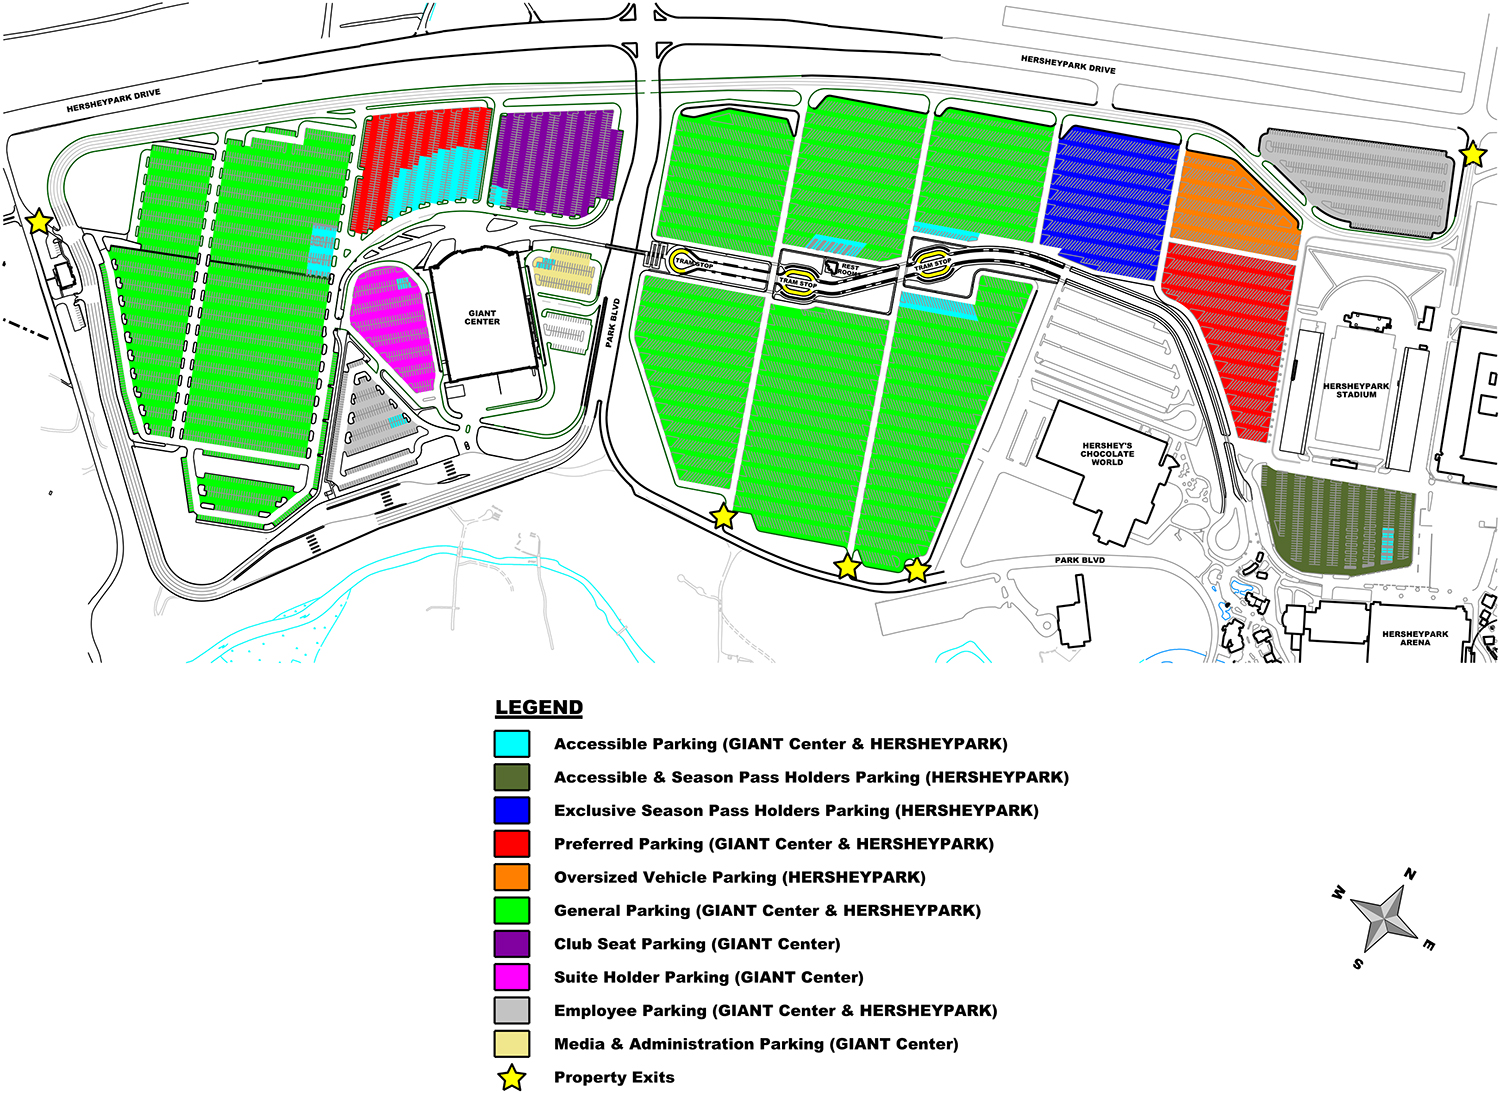 Hershey Entertainment Complex facility parking maps The Amusement